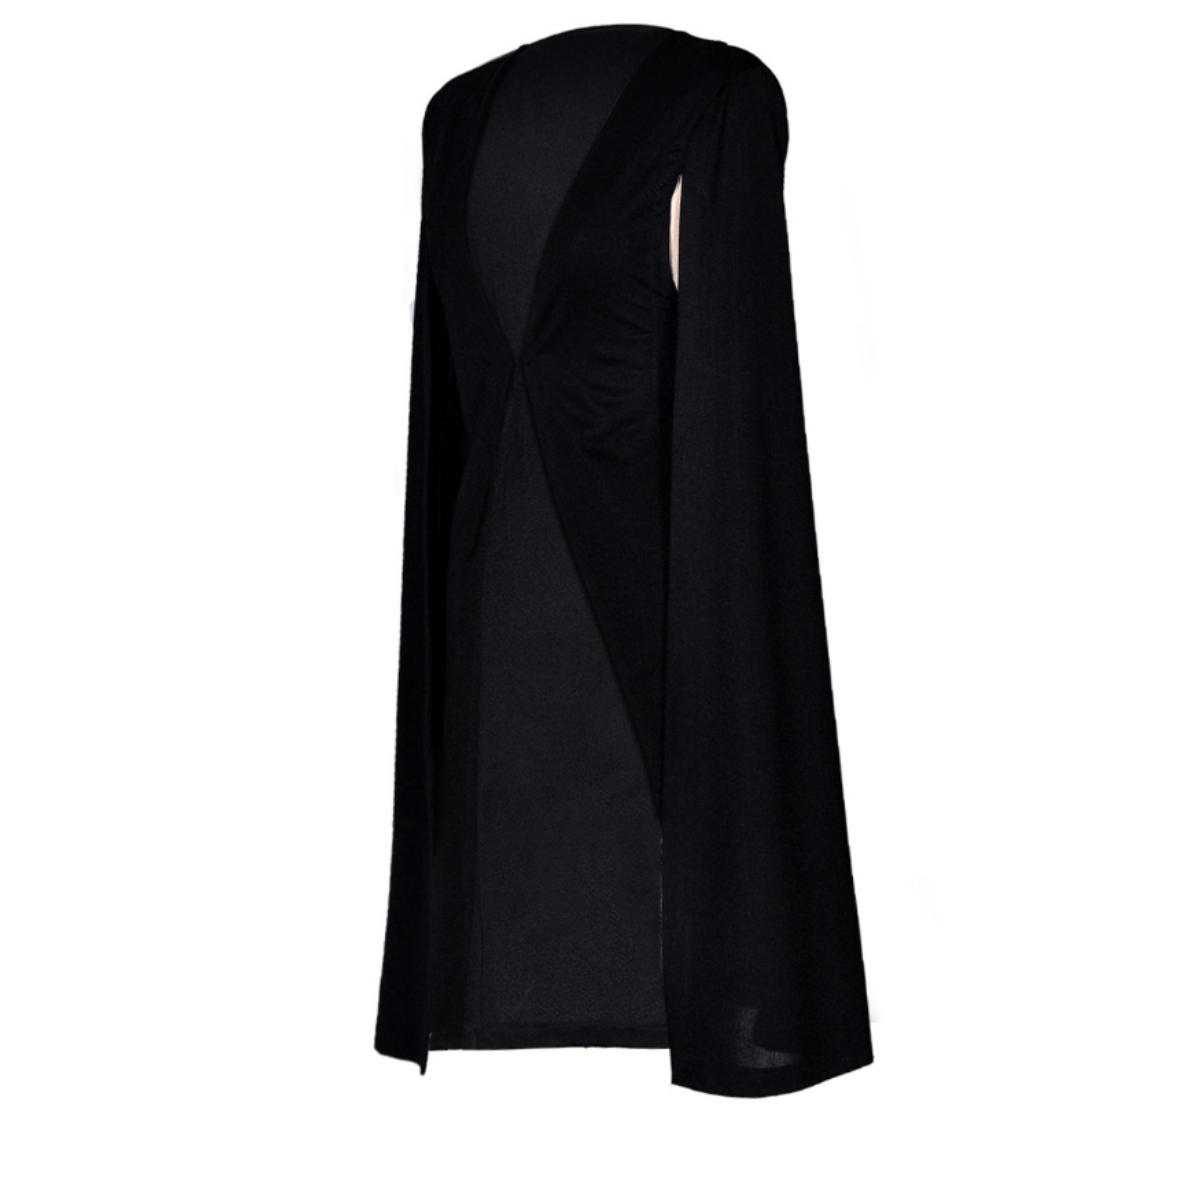 Elegant  Women's Solid Color Cloak  Blazer Black